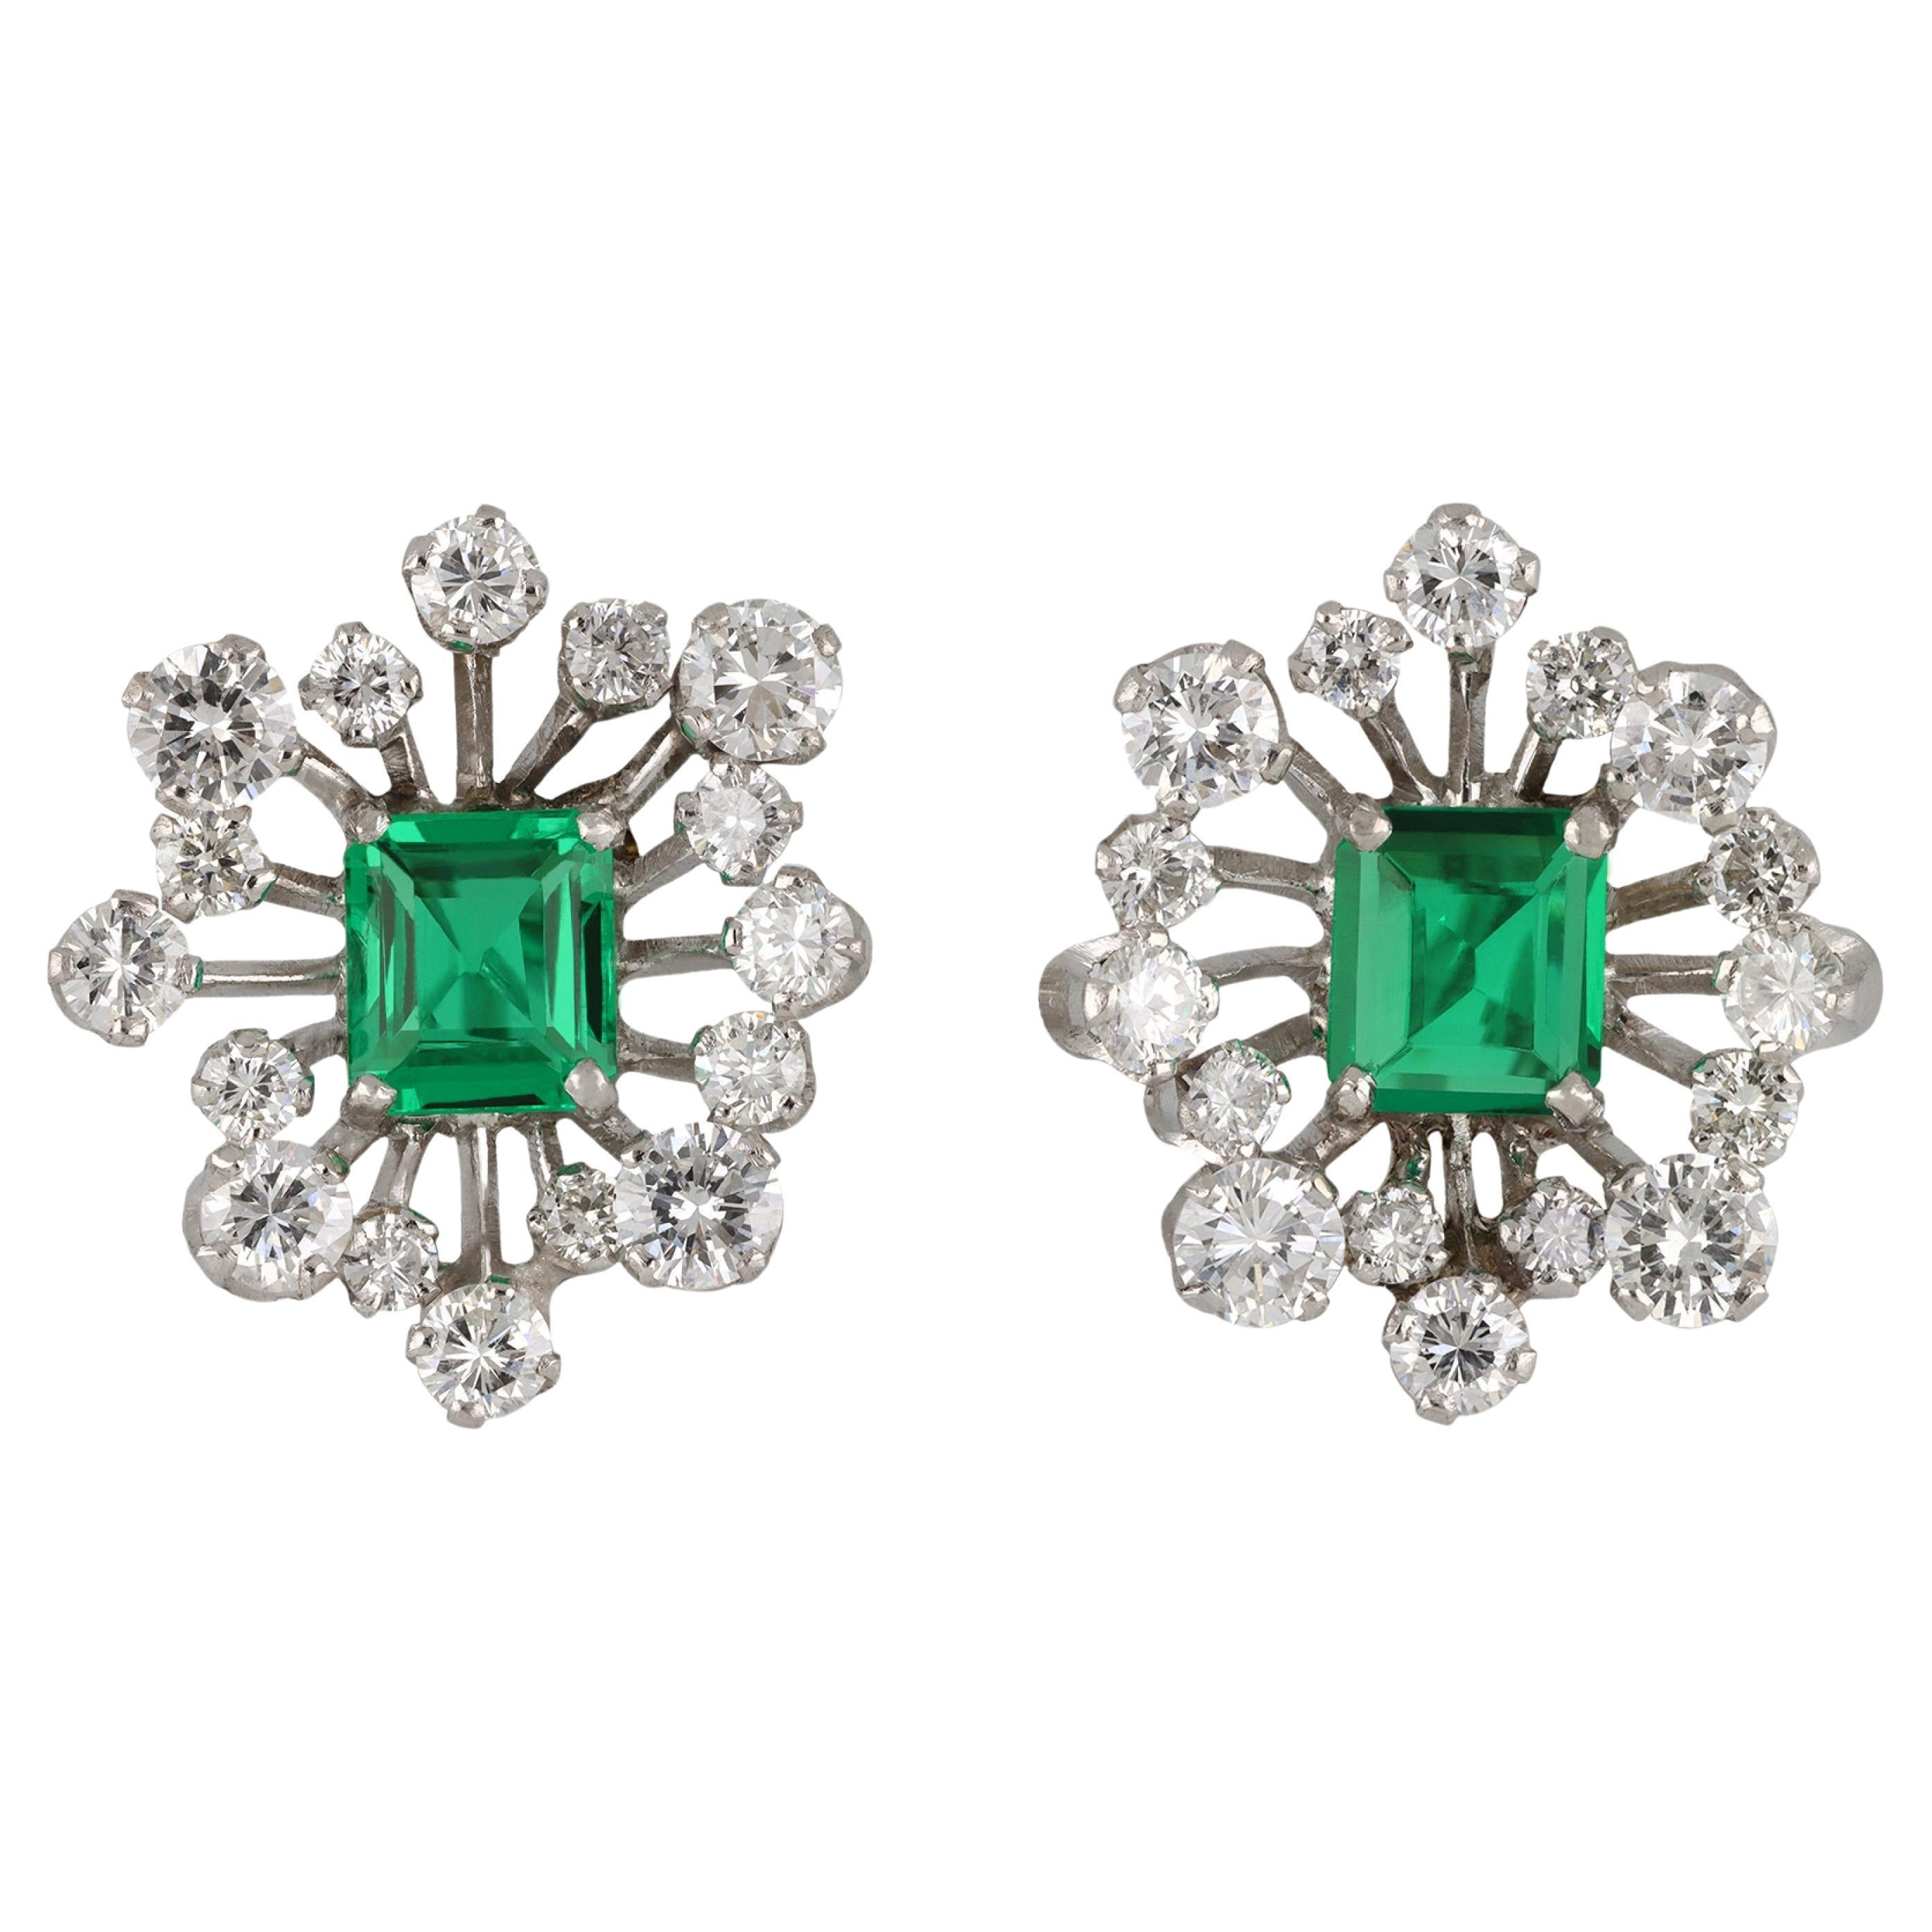 Colombian emerald and diamond earrings, circa 1950